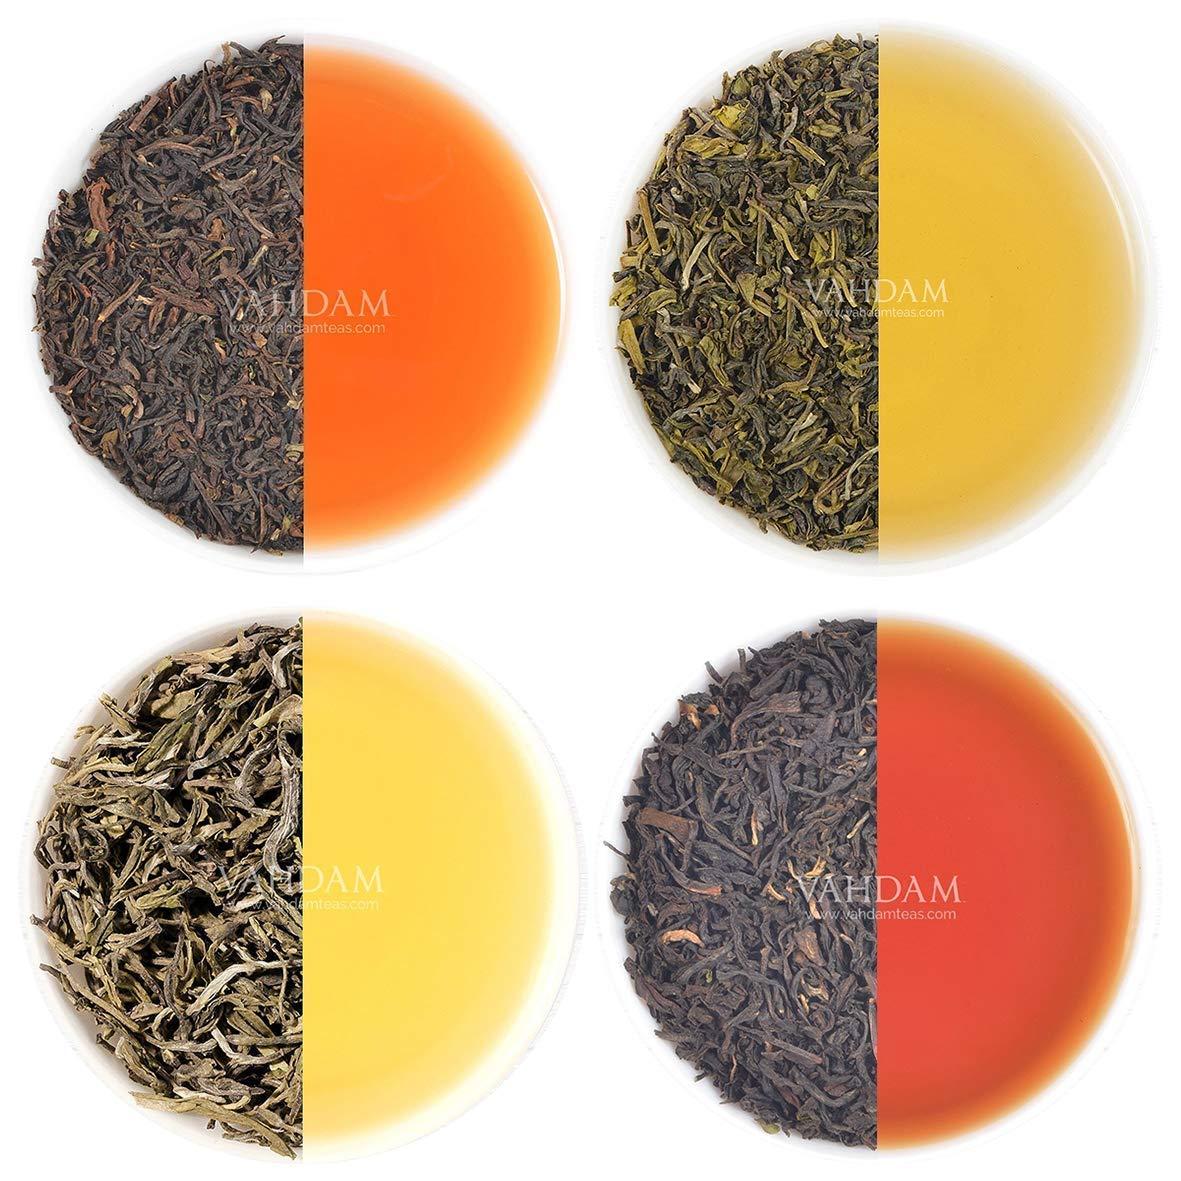 Vahdam Teas Black Tea Earl Grey Citrus 16 oz (454 g)